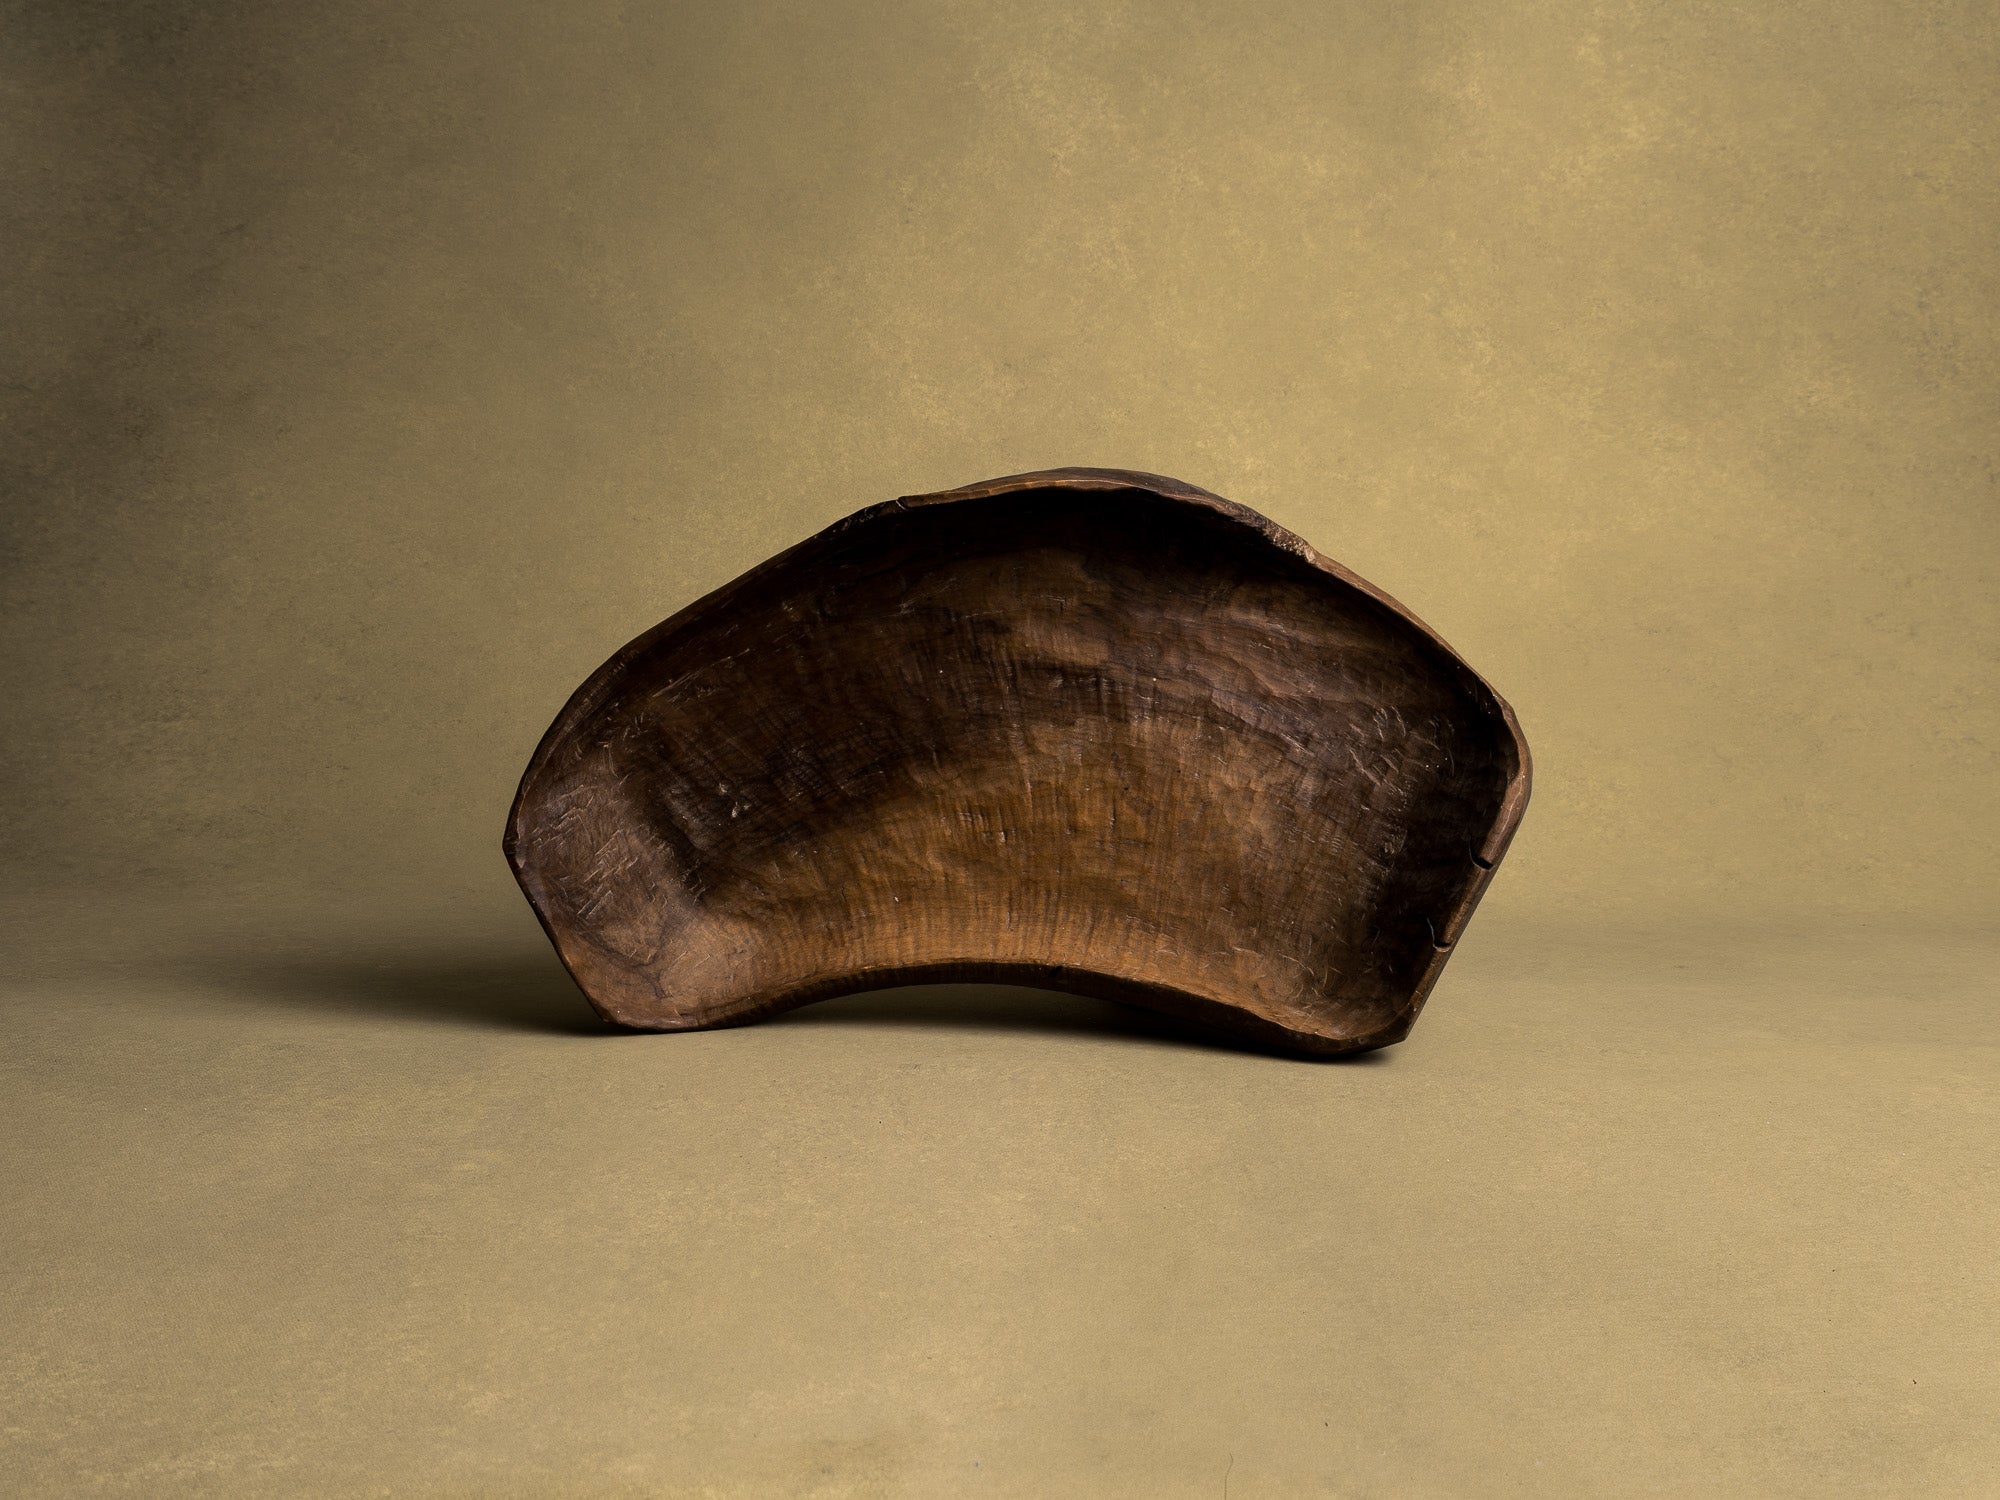 Coupe monoxyle normande en noyer, art paysan, France (XIXe siècle)..Free form carved Norman walnut wooden bowl, Peasant art, France (19th century)